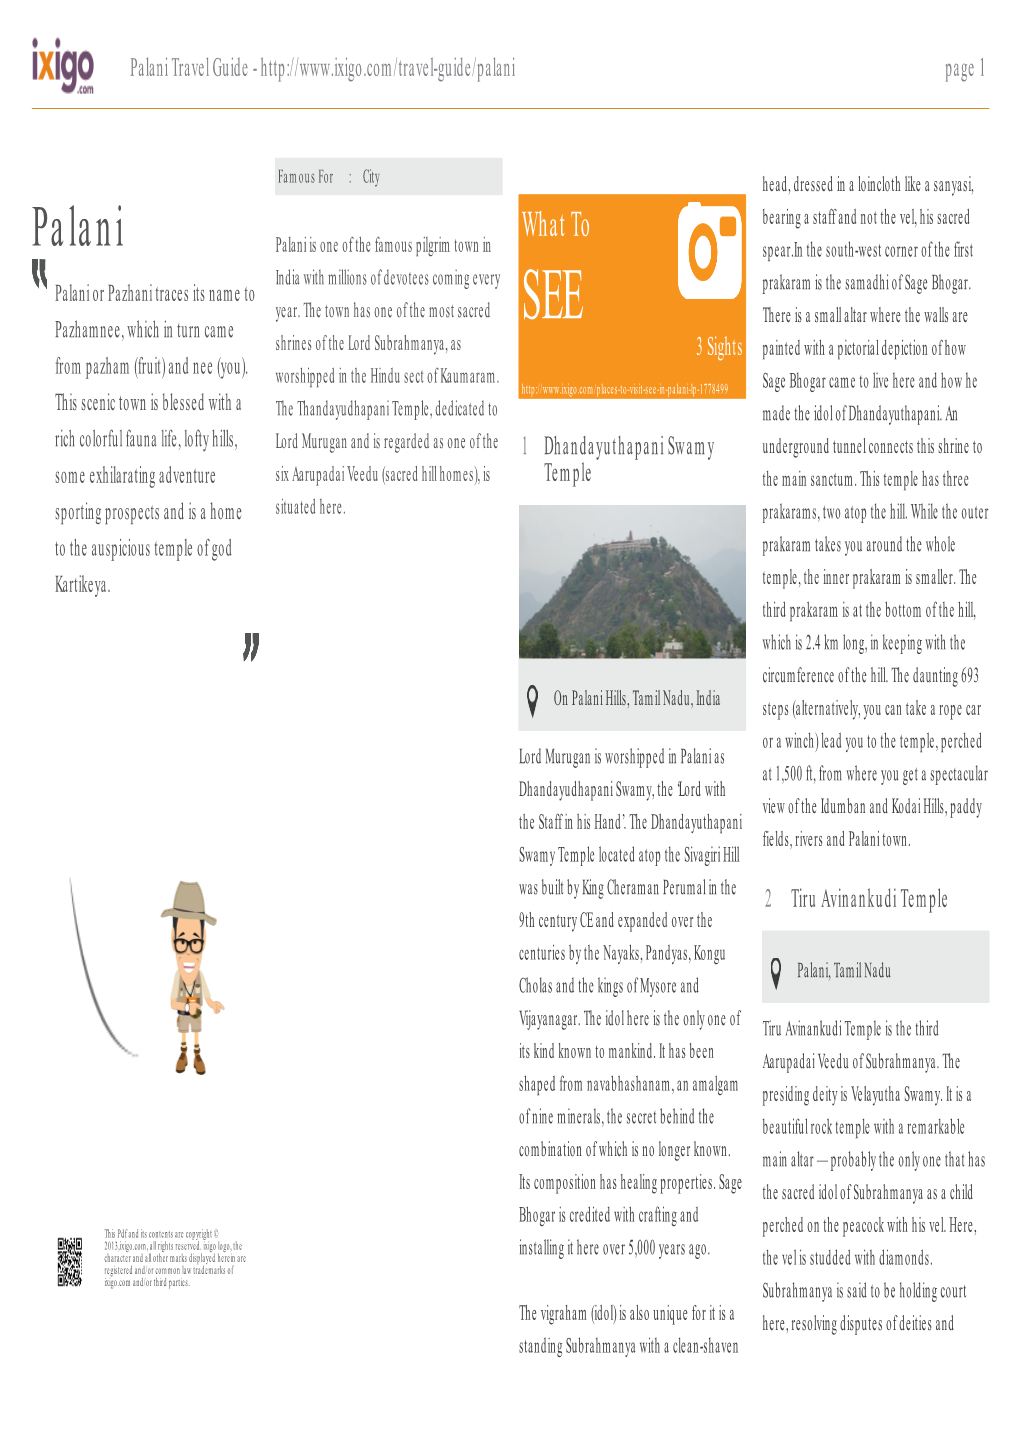 Palani Travel Guide - Page 1